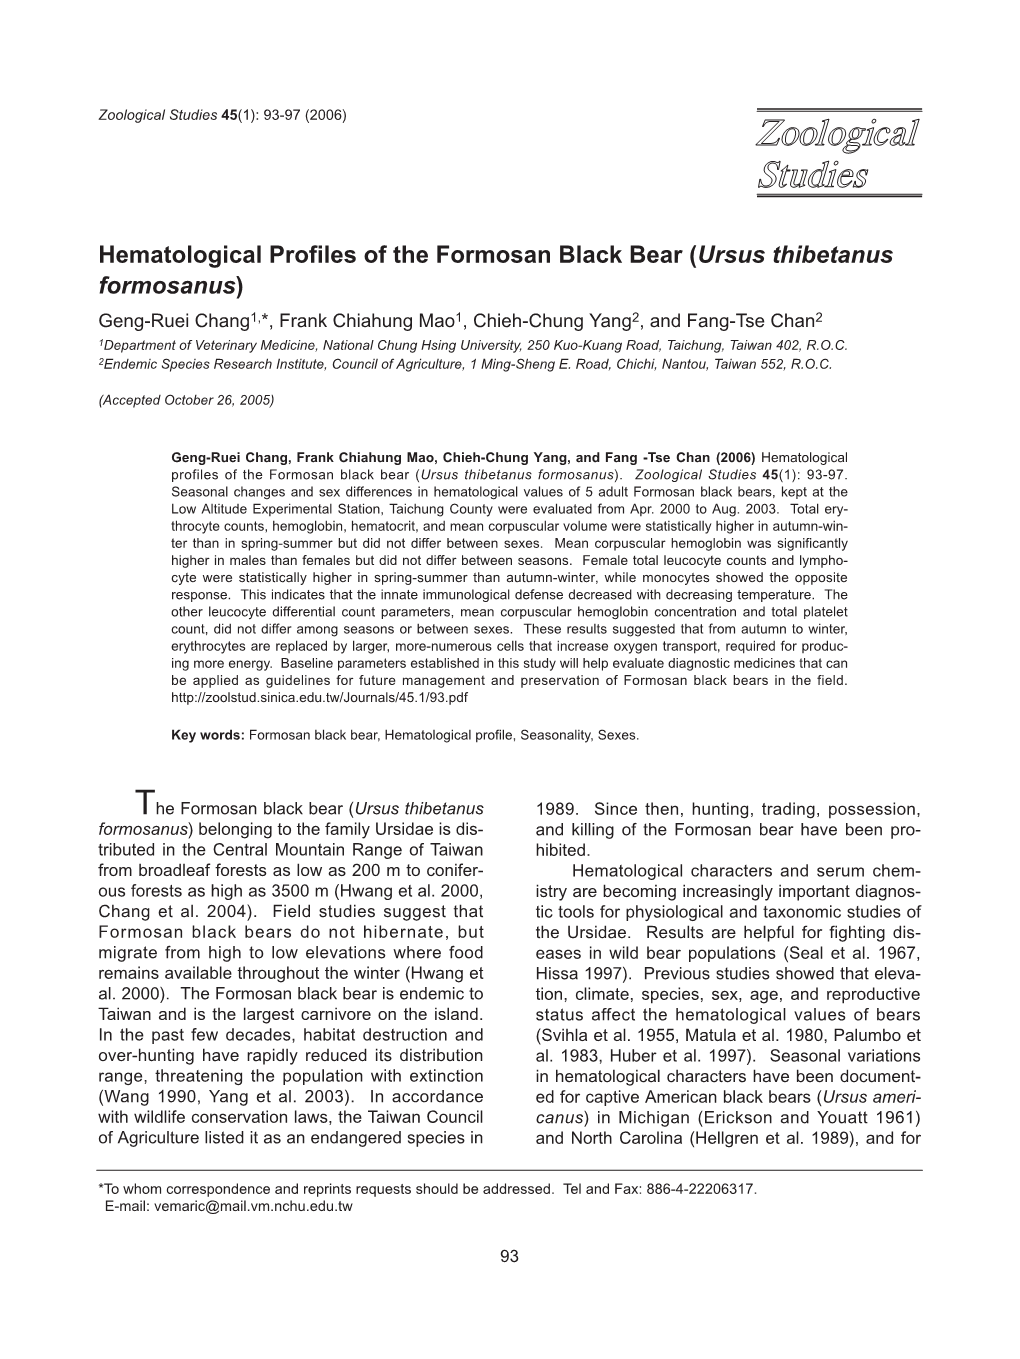 Hematological Profiles of the Formosan Black Bear